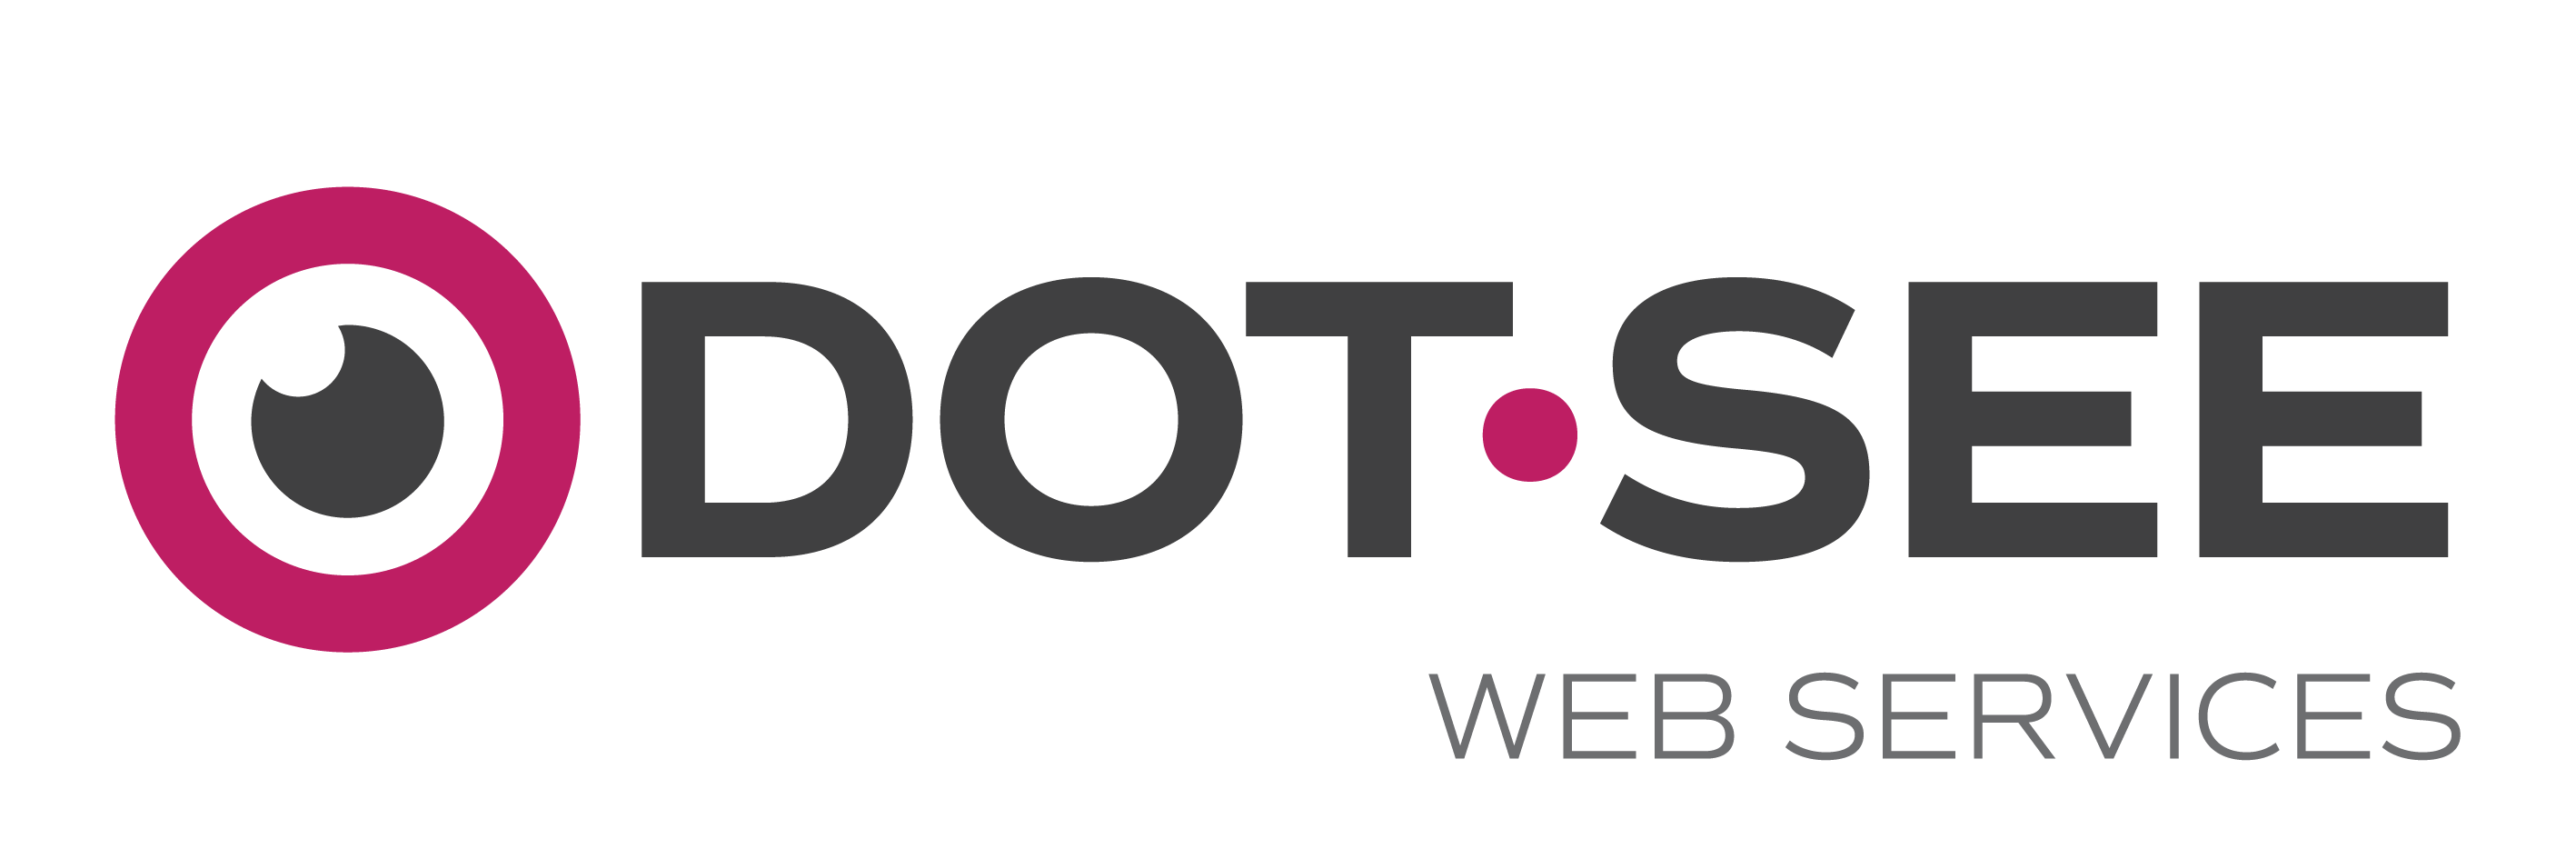 Dot.Blog Logo - Blog Web Services